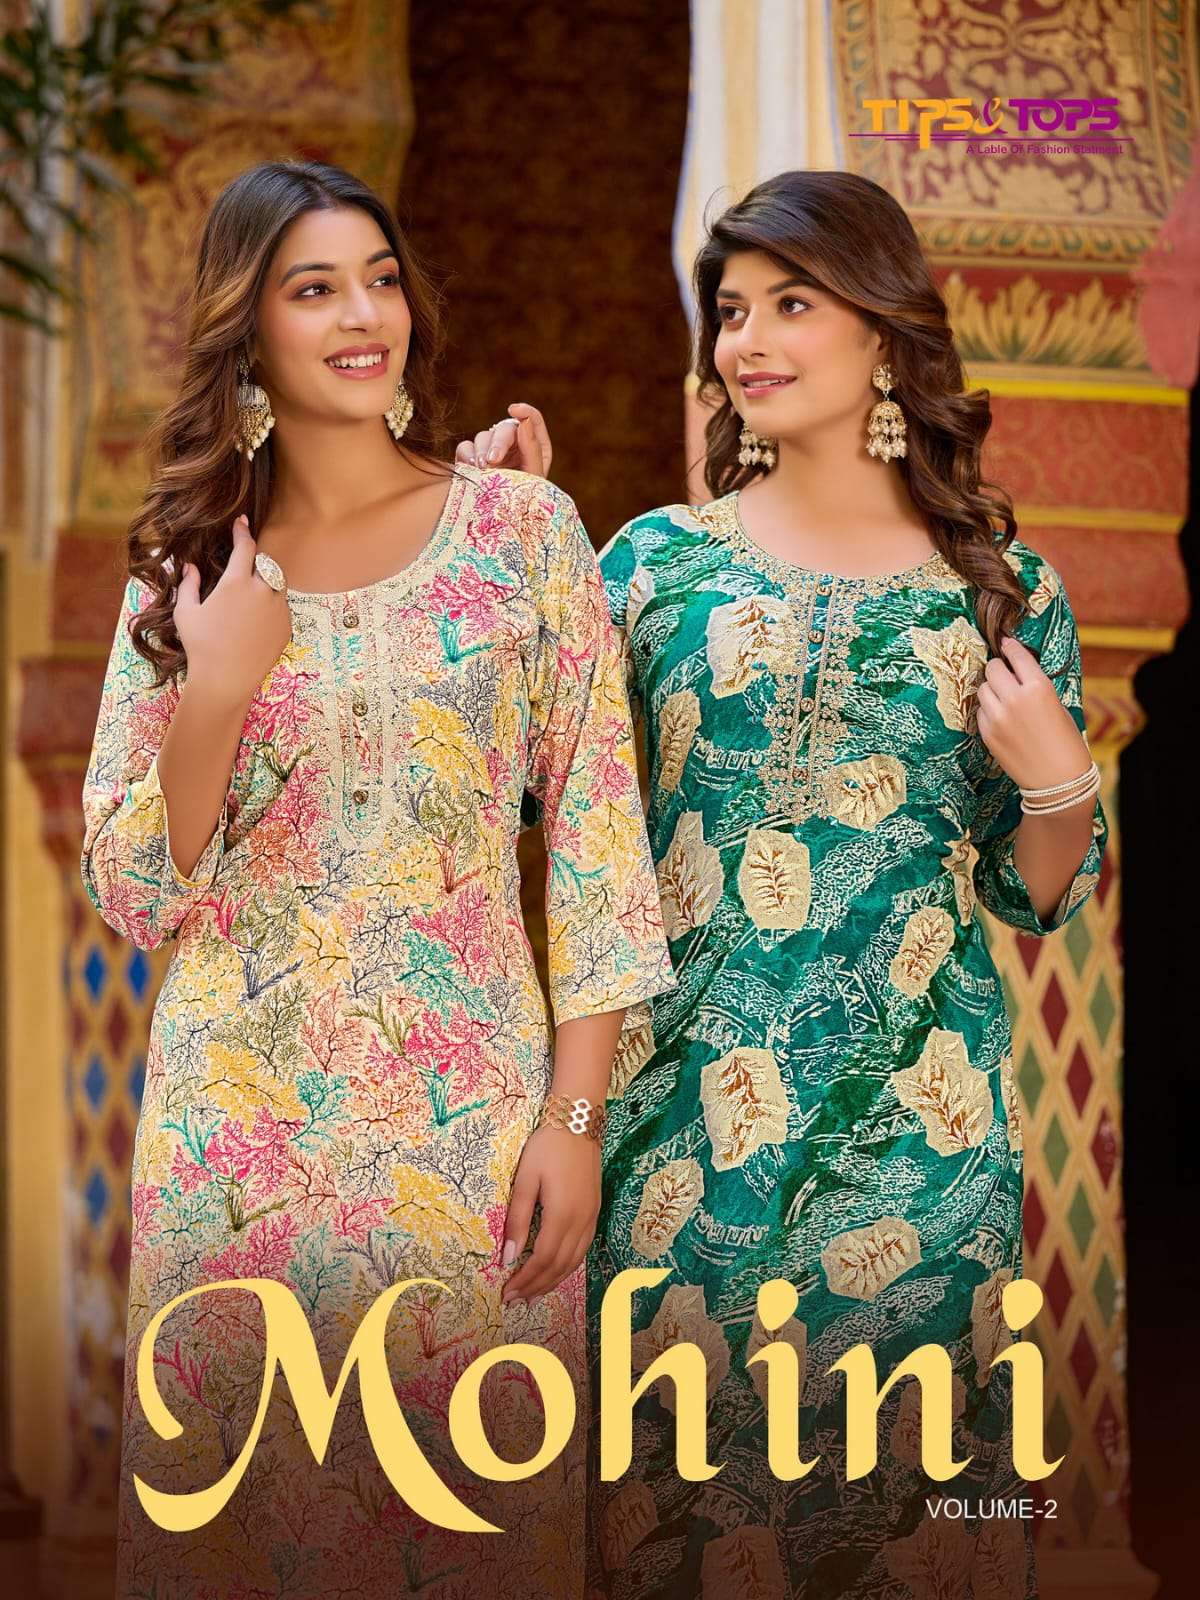 Tips & Tops Mohini Printed Kurti Wholesale Catalog